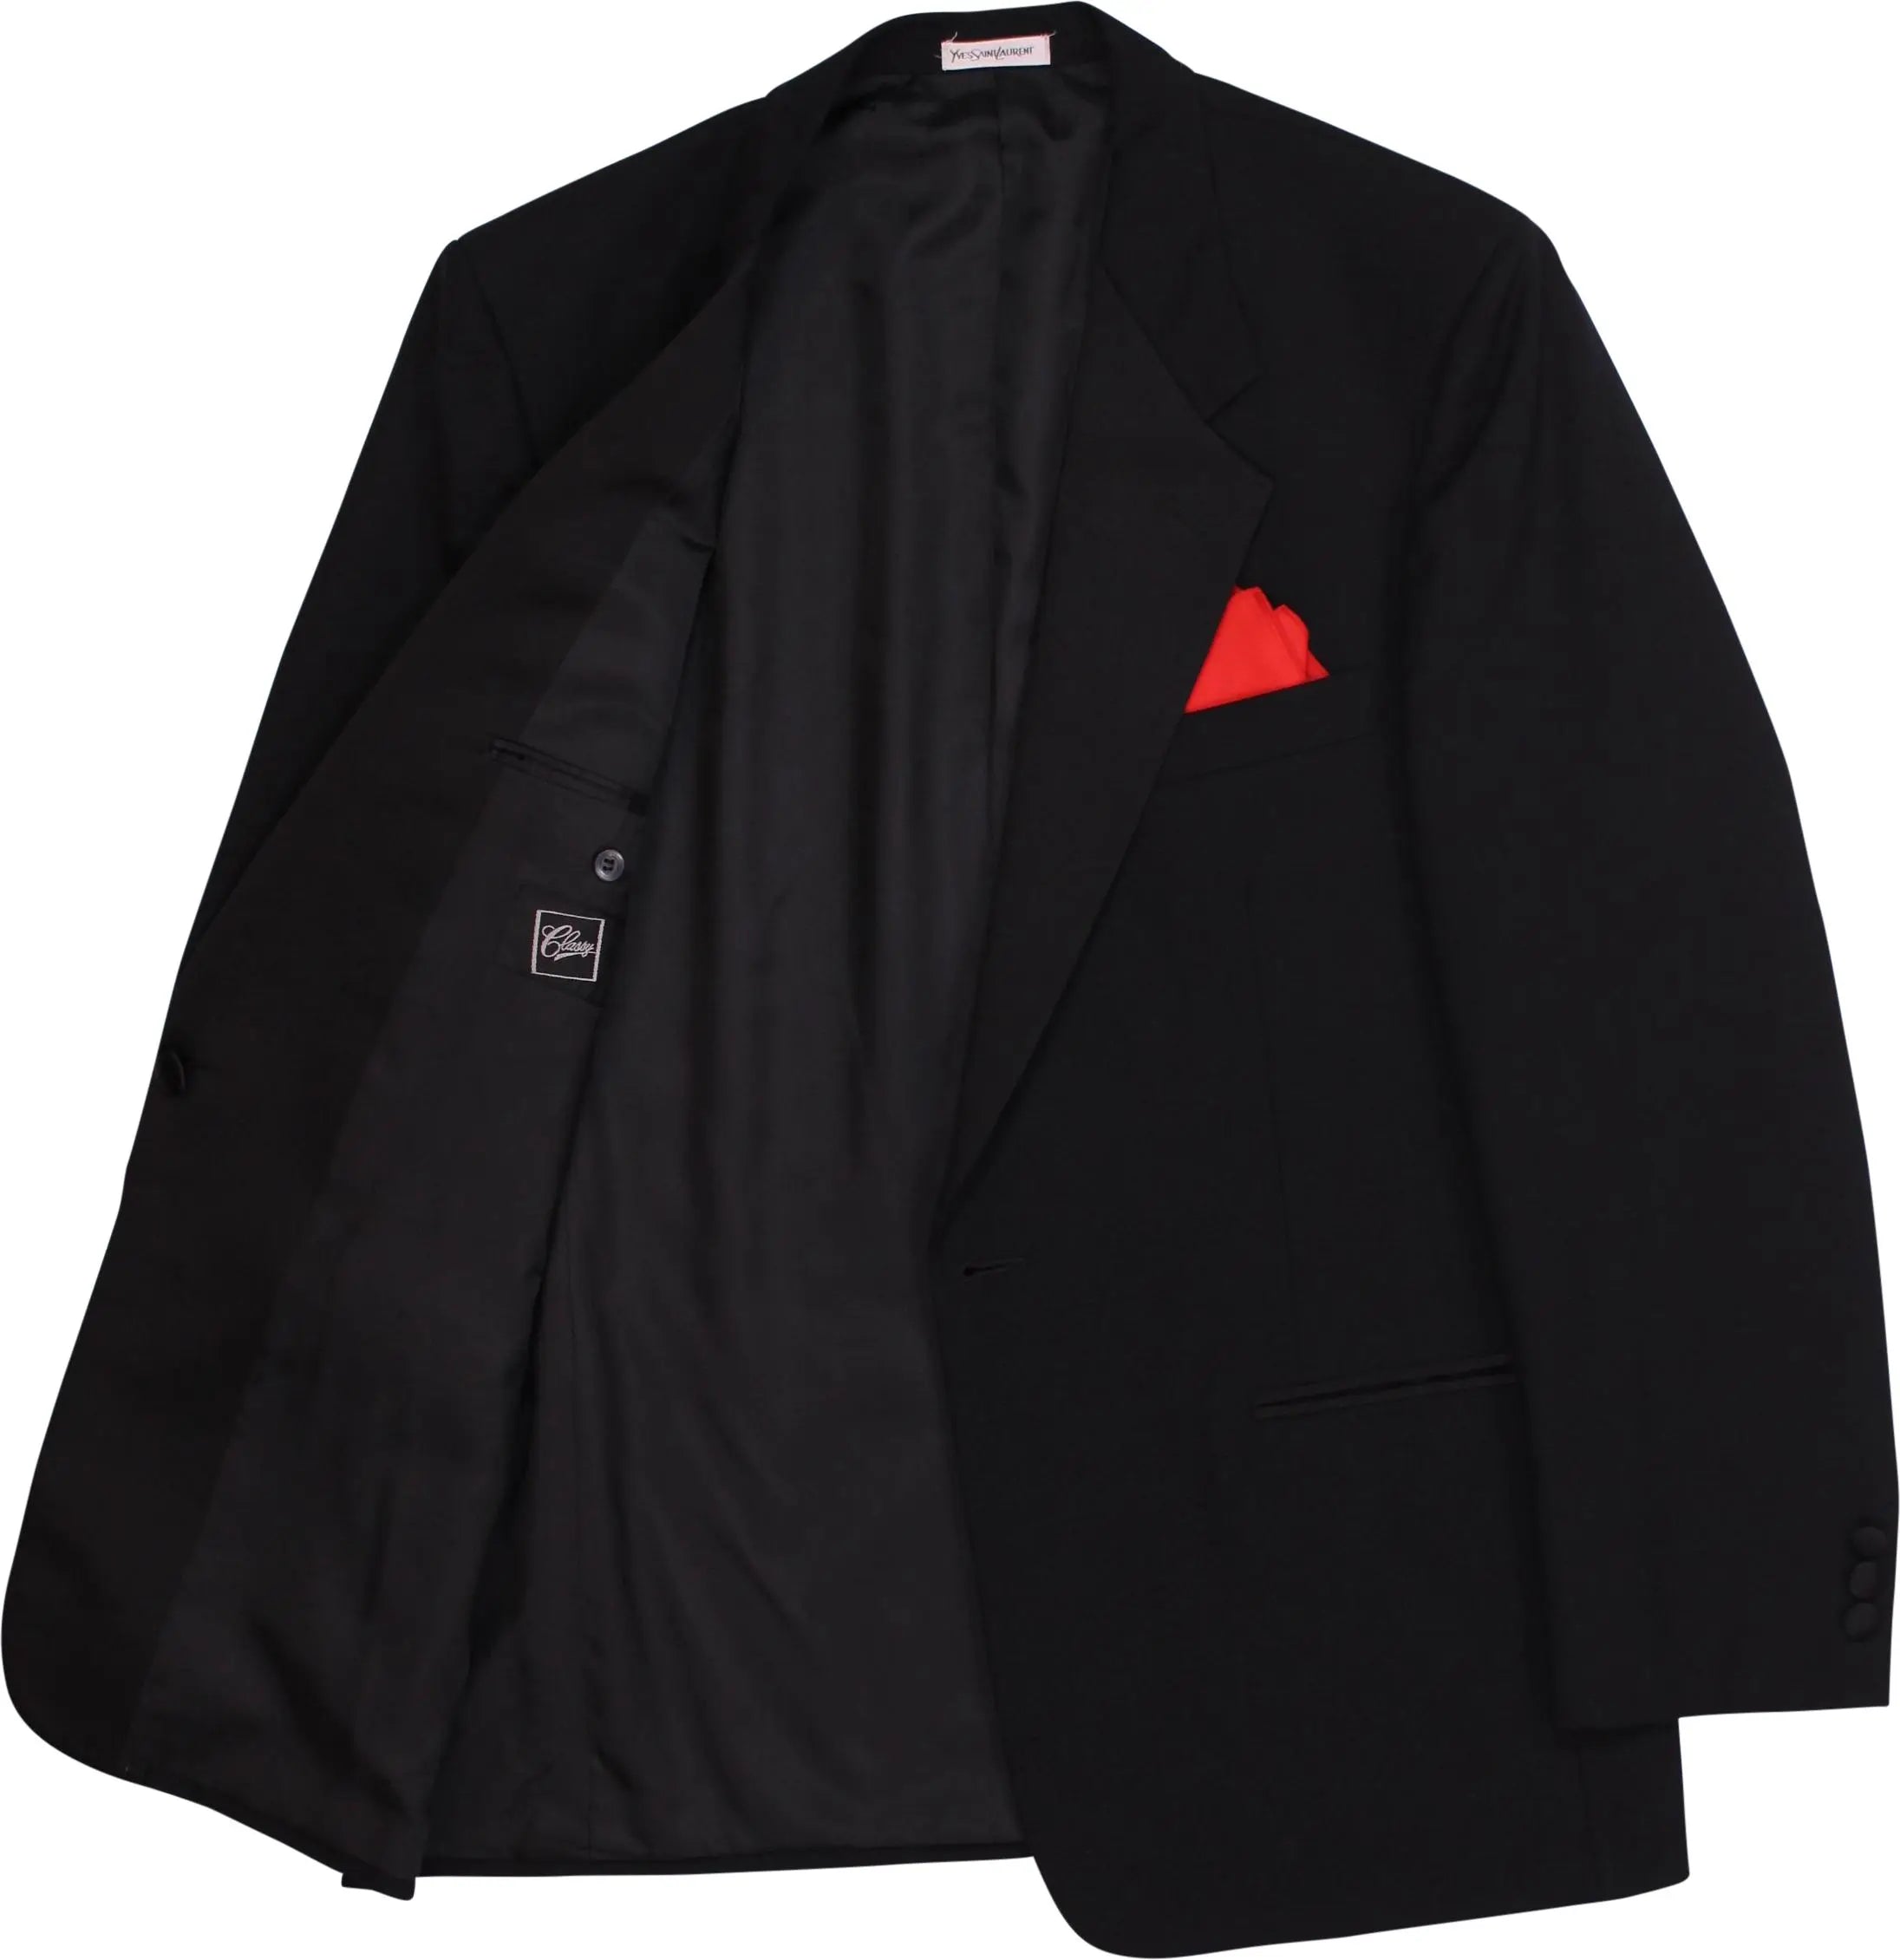 Yves Saint Laurent - Black Yves Saint Laurent Blazer- ThriftTale.com - Vintage and second handclothing